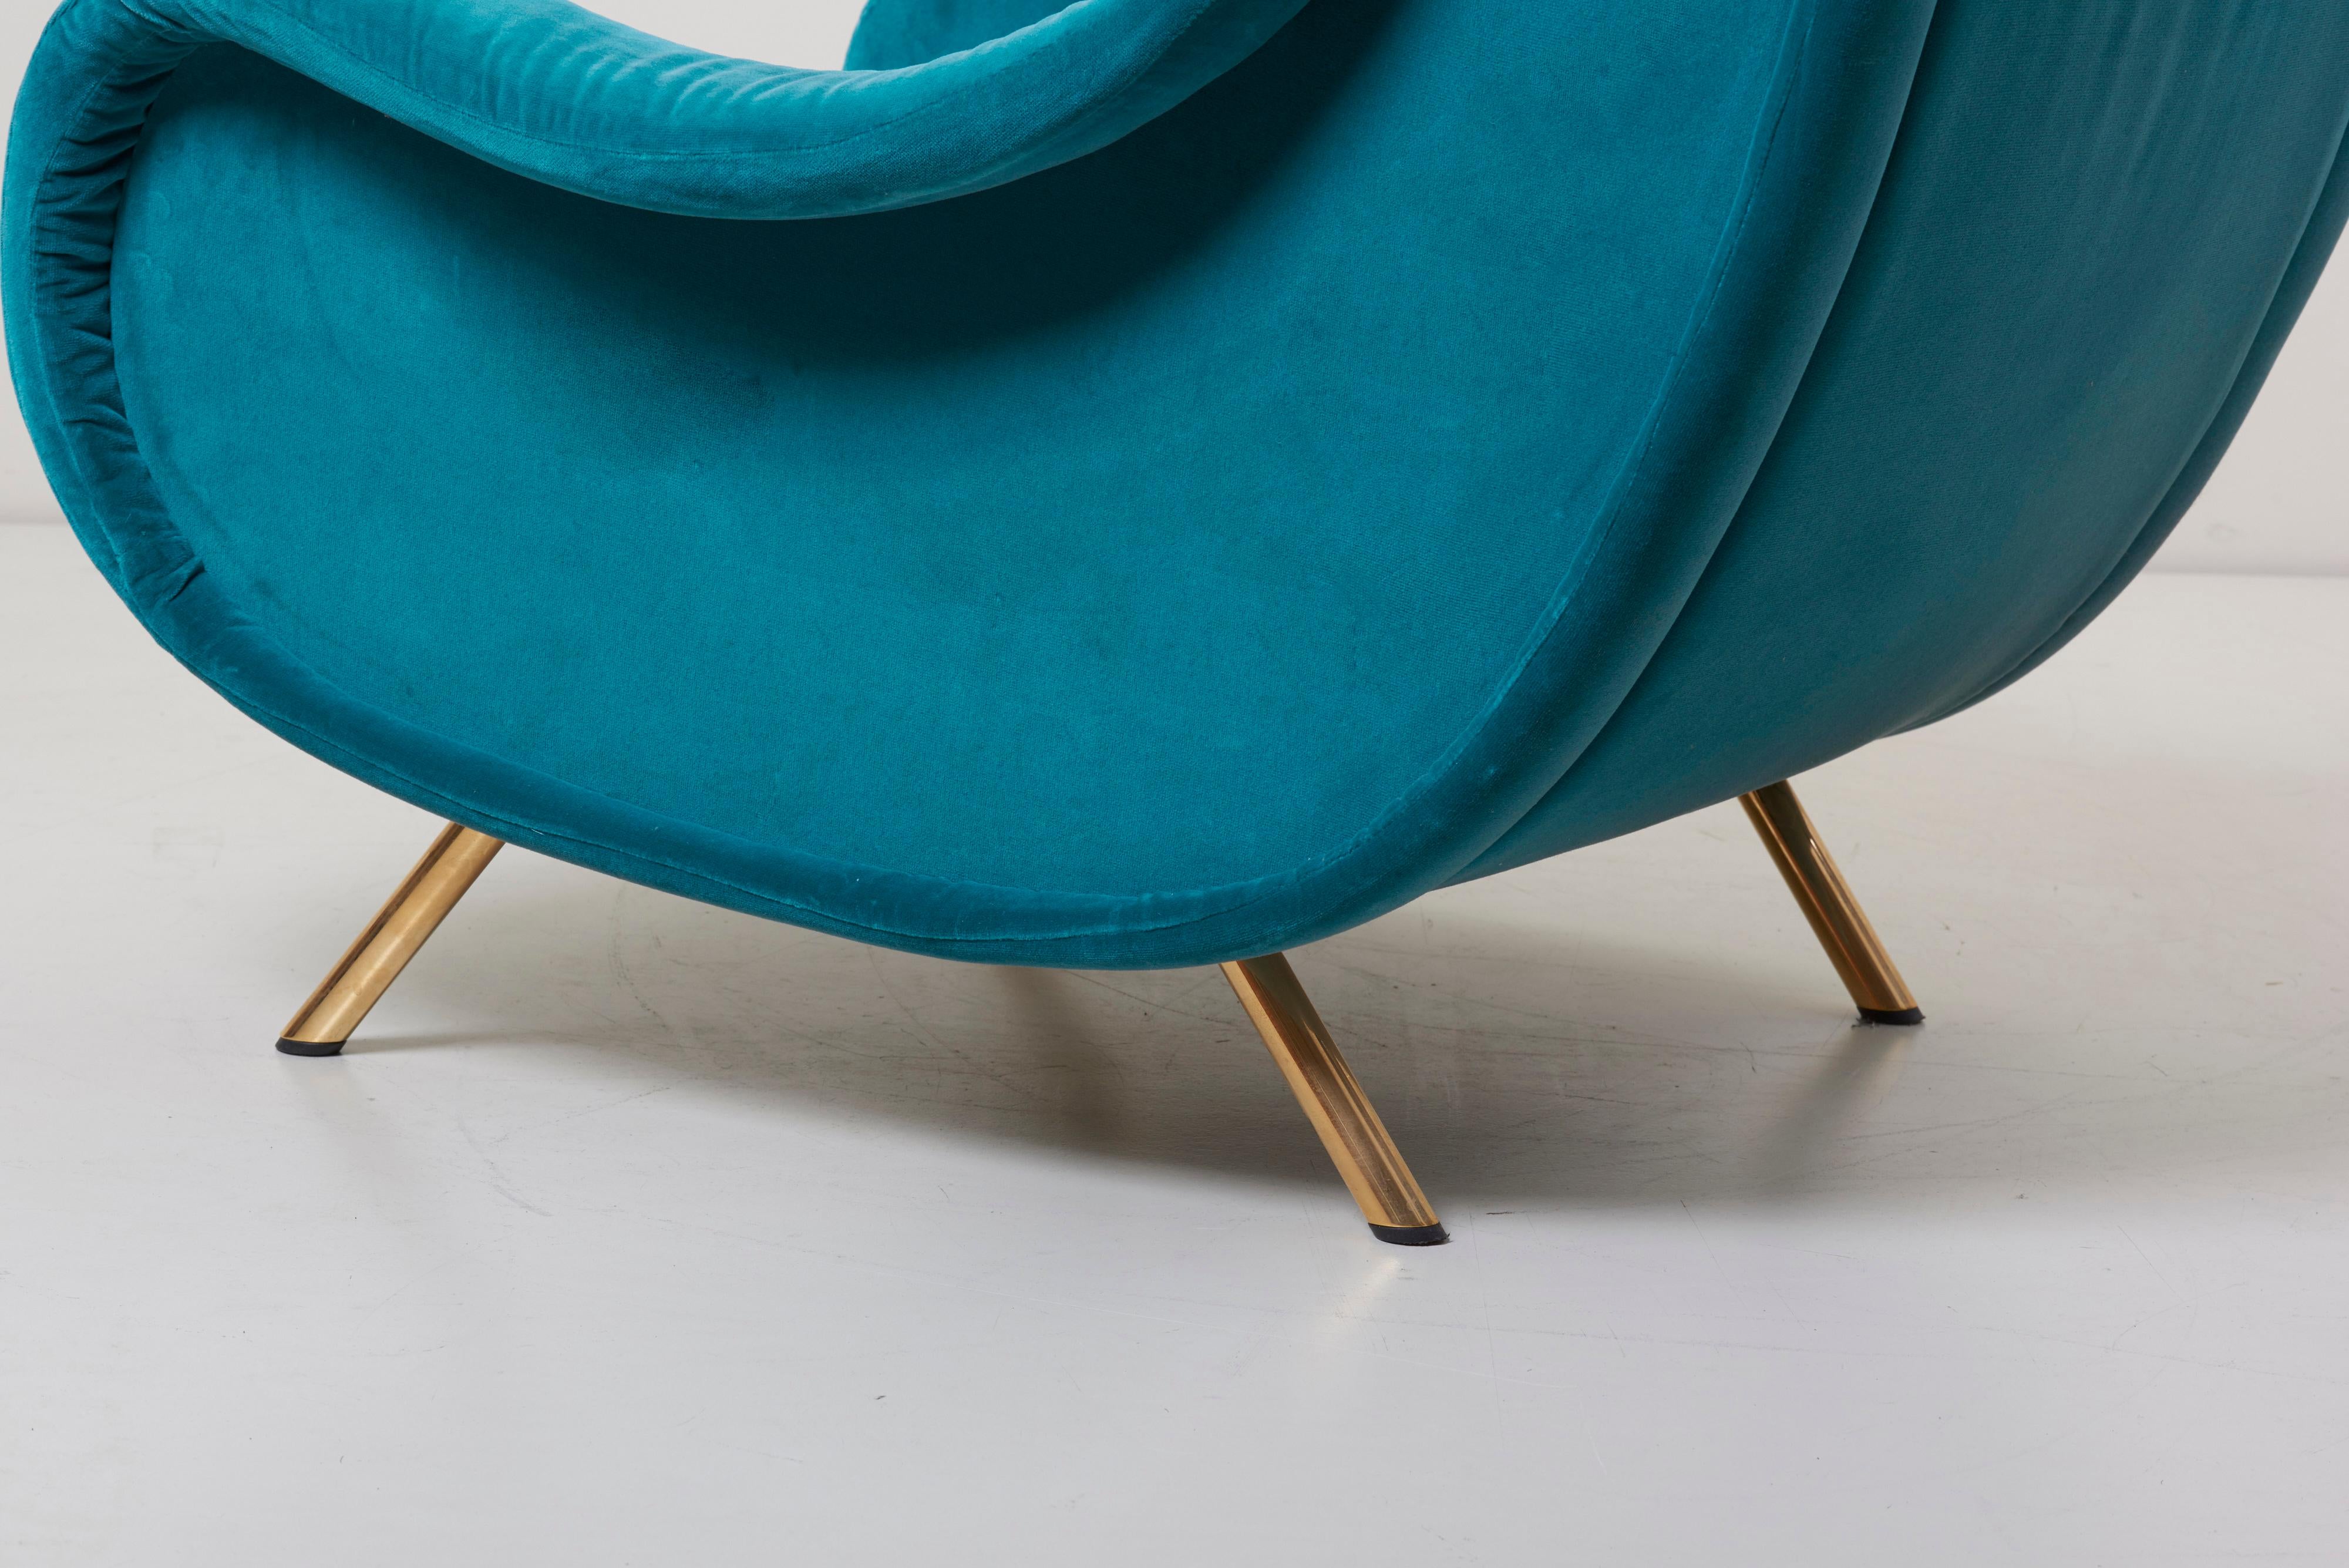 20th Century Senior Lounge Chair in Blue Velvet by Marco Zanuso for Arflex, Italy, 1955